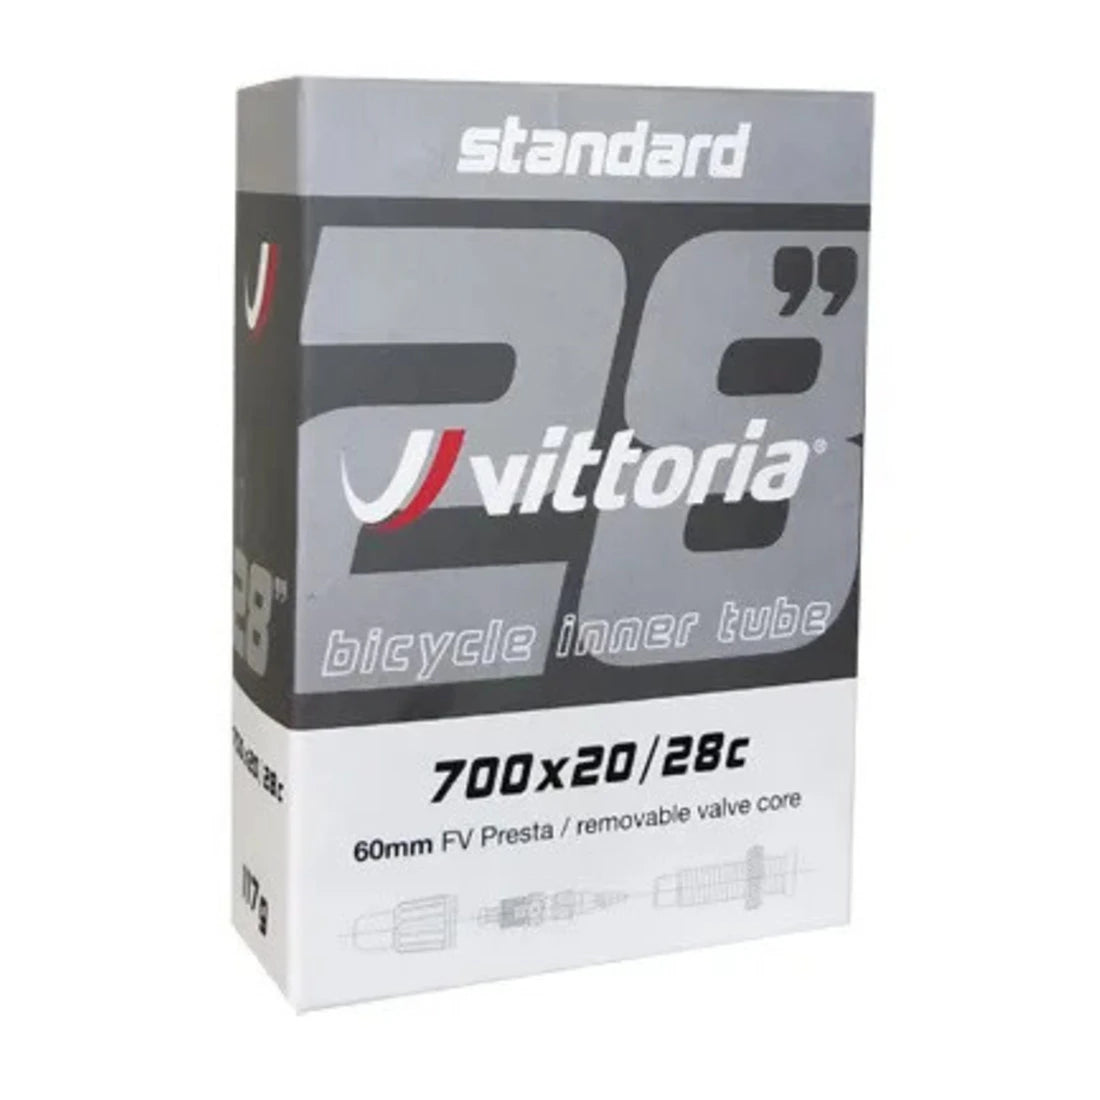 Vittoria-Standard-Tube-700x20-28-FV-60mm